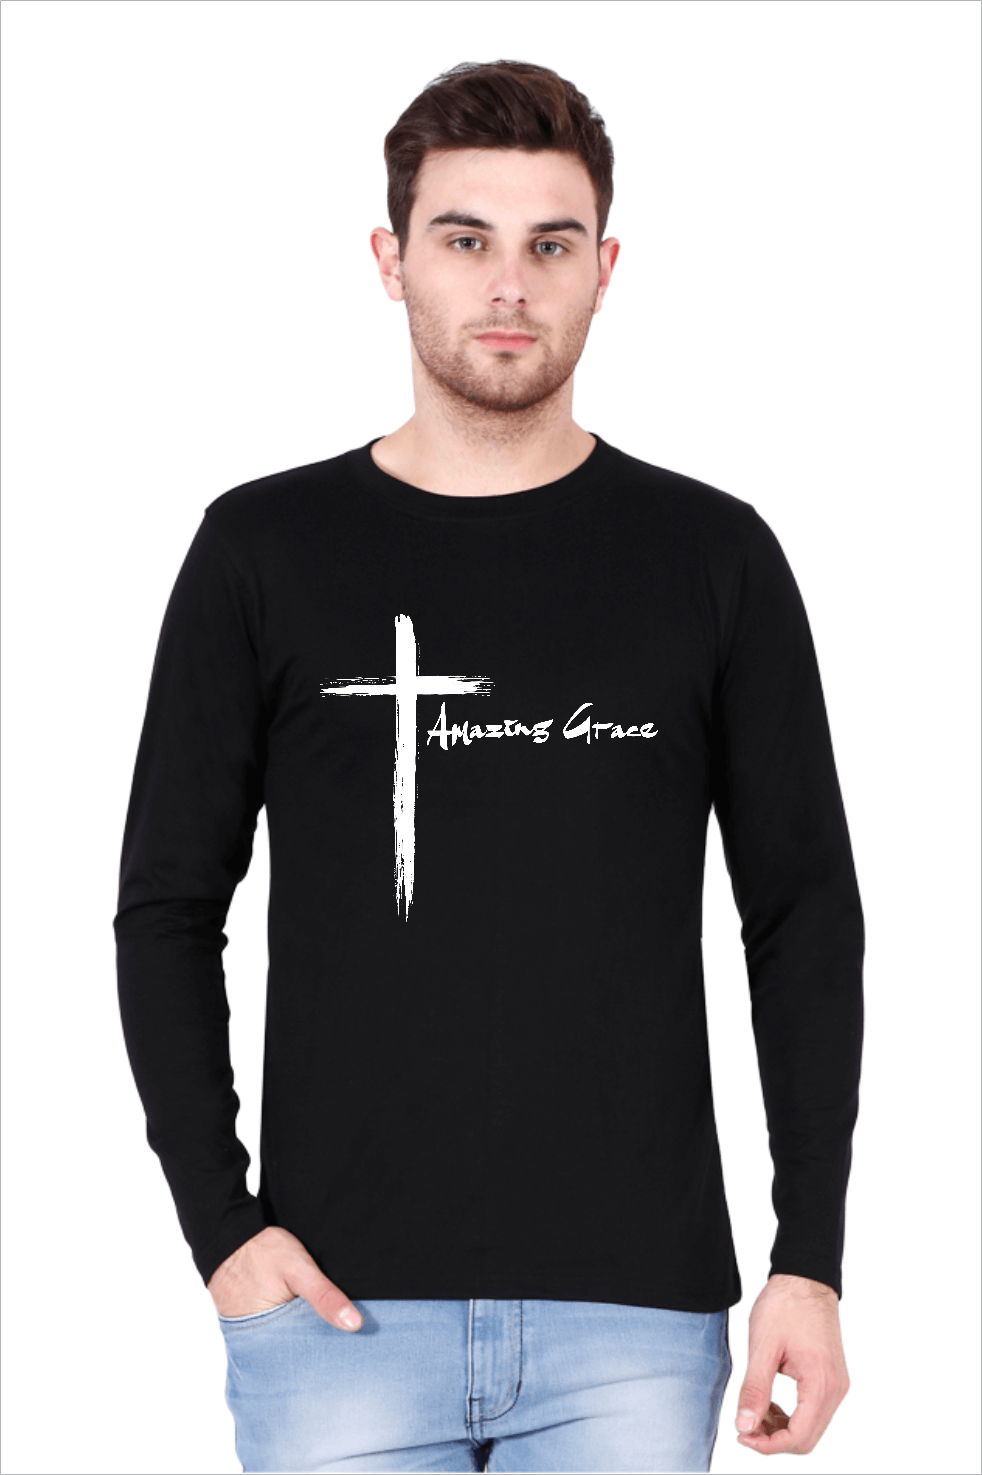 Living Words Men Round Neck T Shirt S / Black Christian T Shirts Online India - Amazing Grace Cross